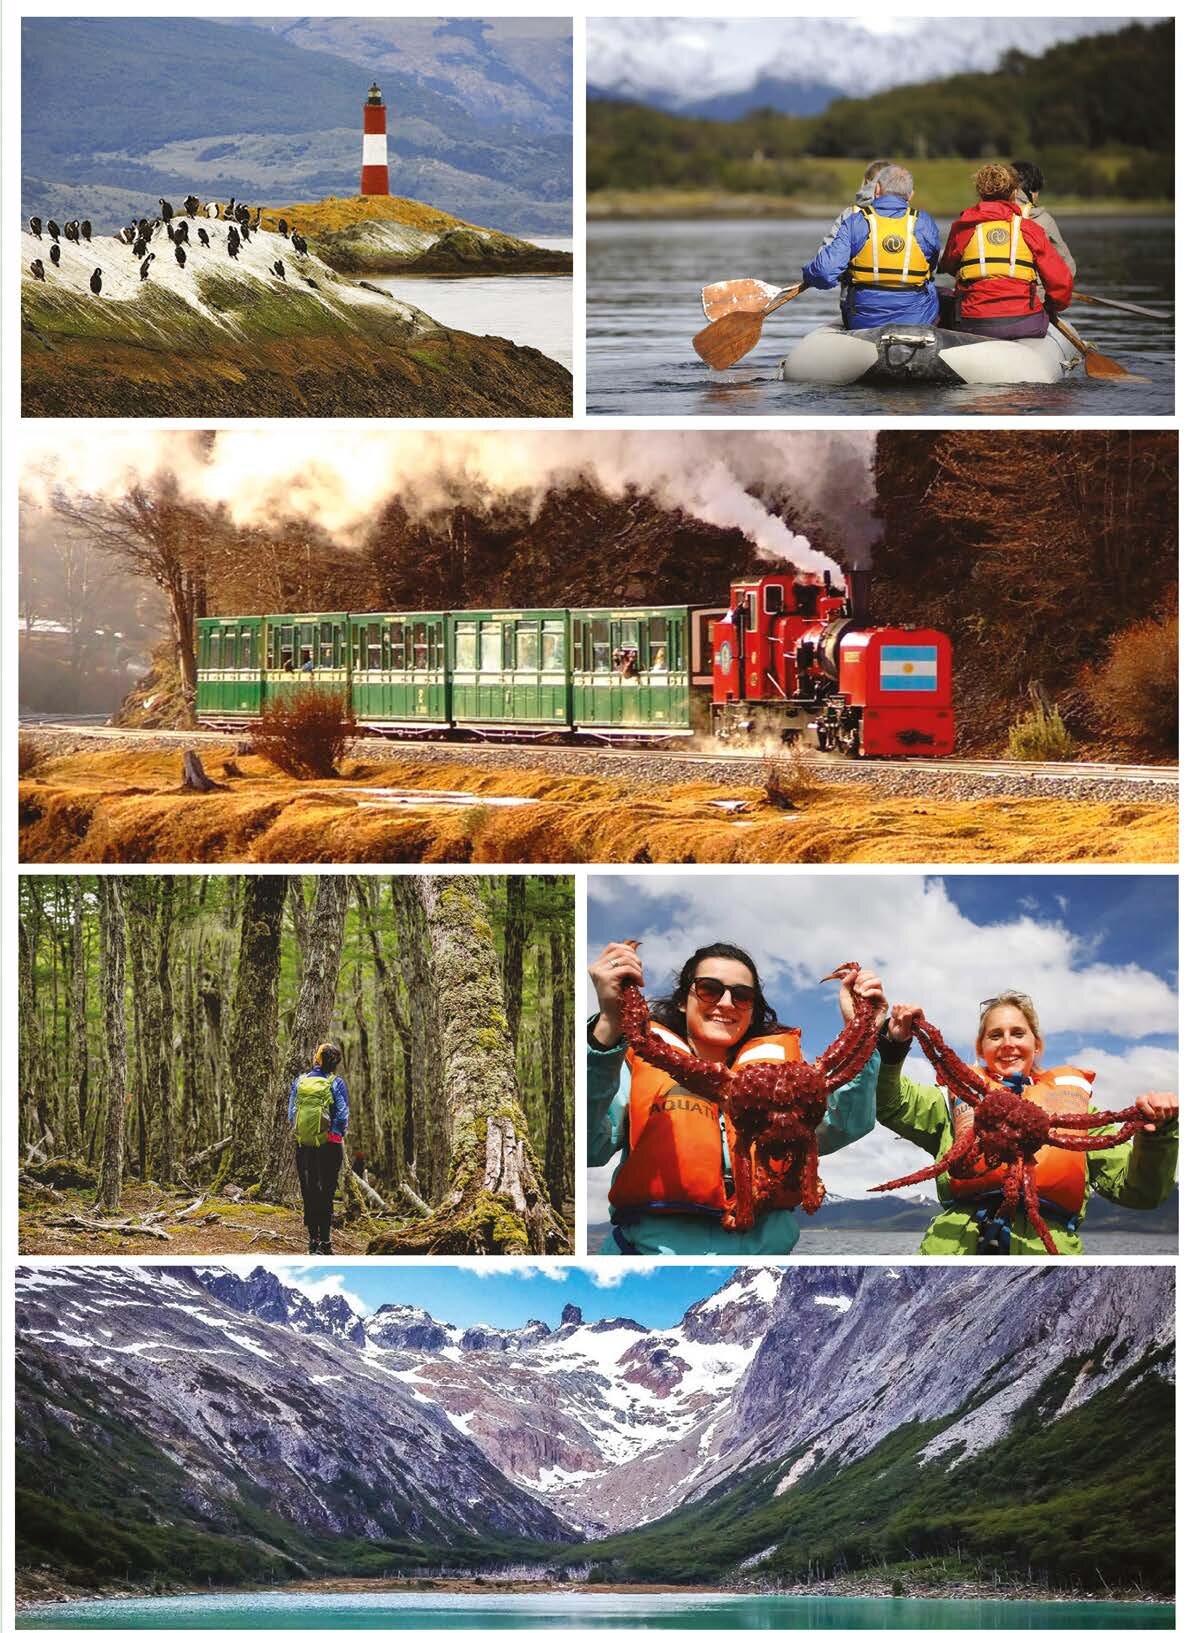 argentina travel brochure